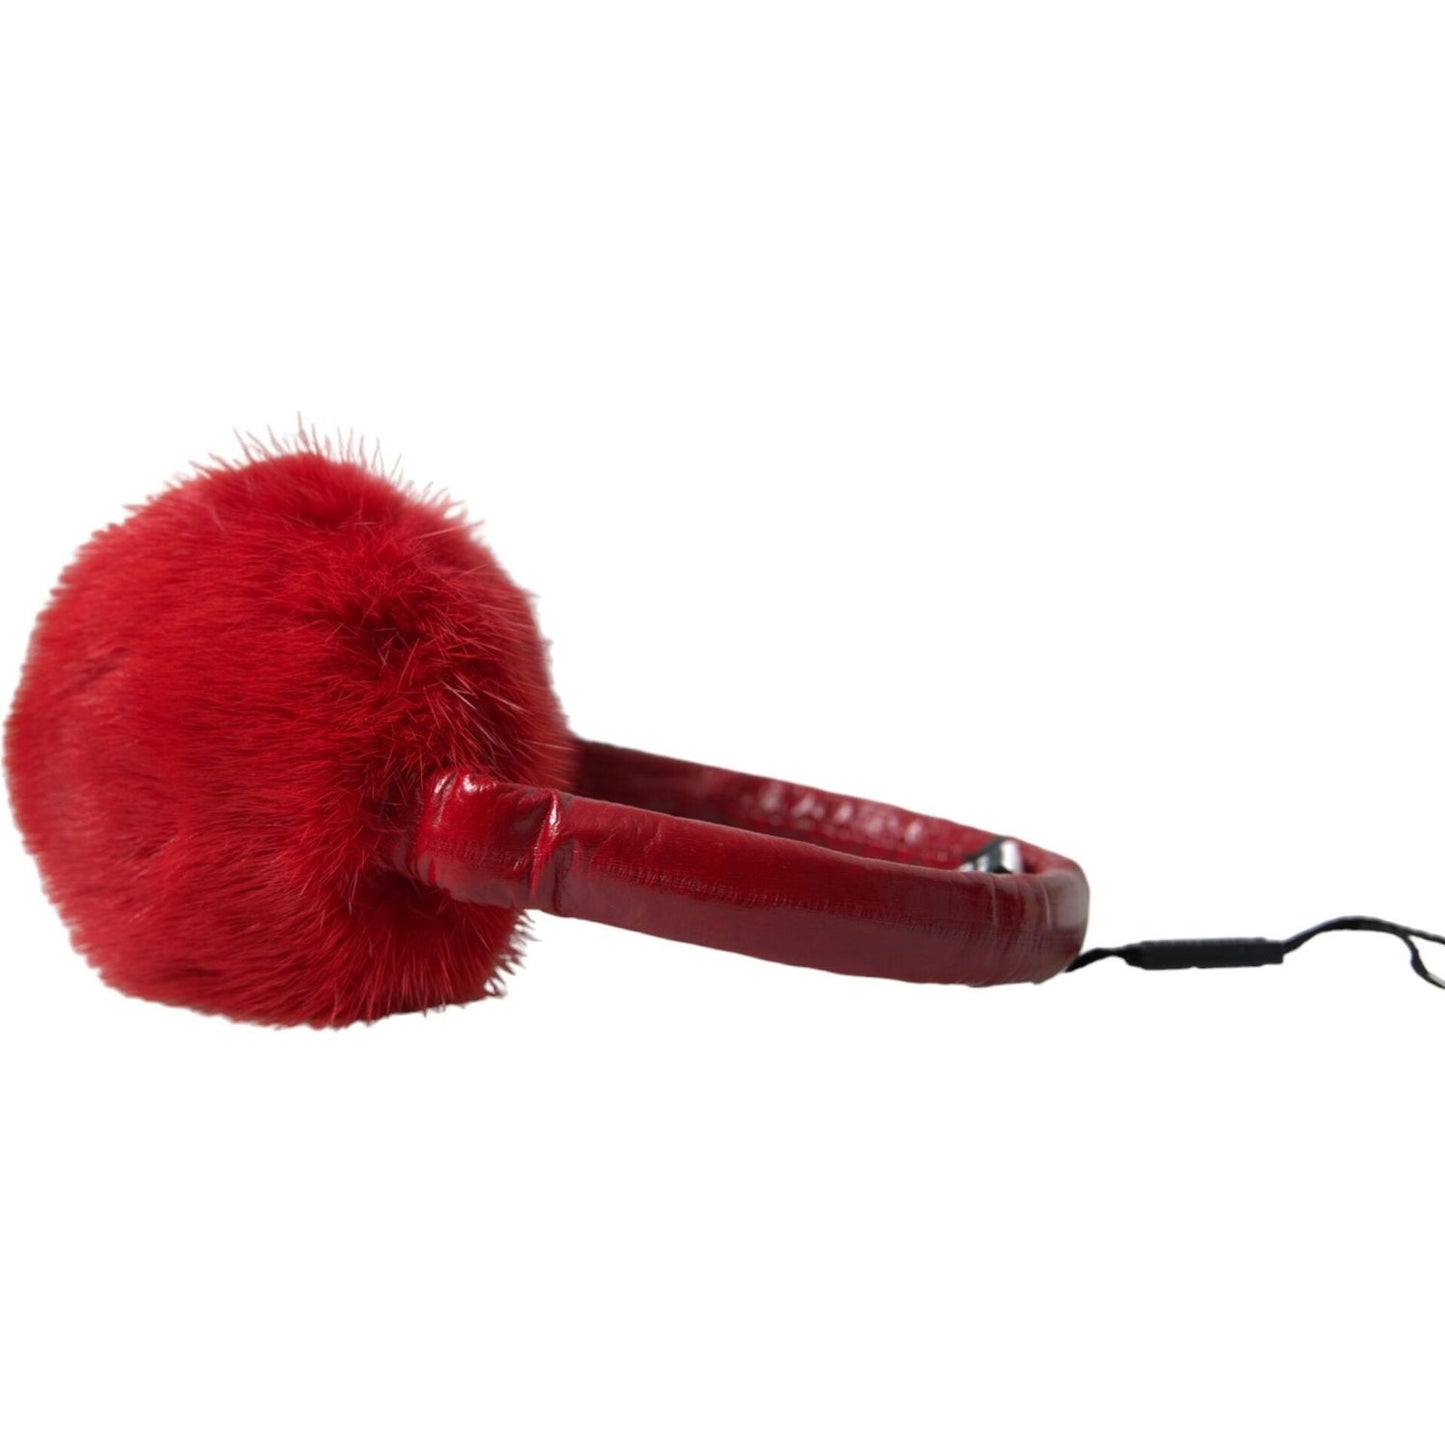 Dolce & Gabbana Red Mink Fur Elegance Ear Muffs red-mink-fur-elegance-ear-muffs